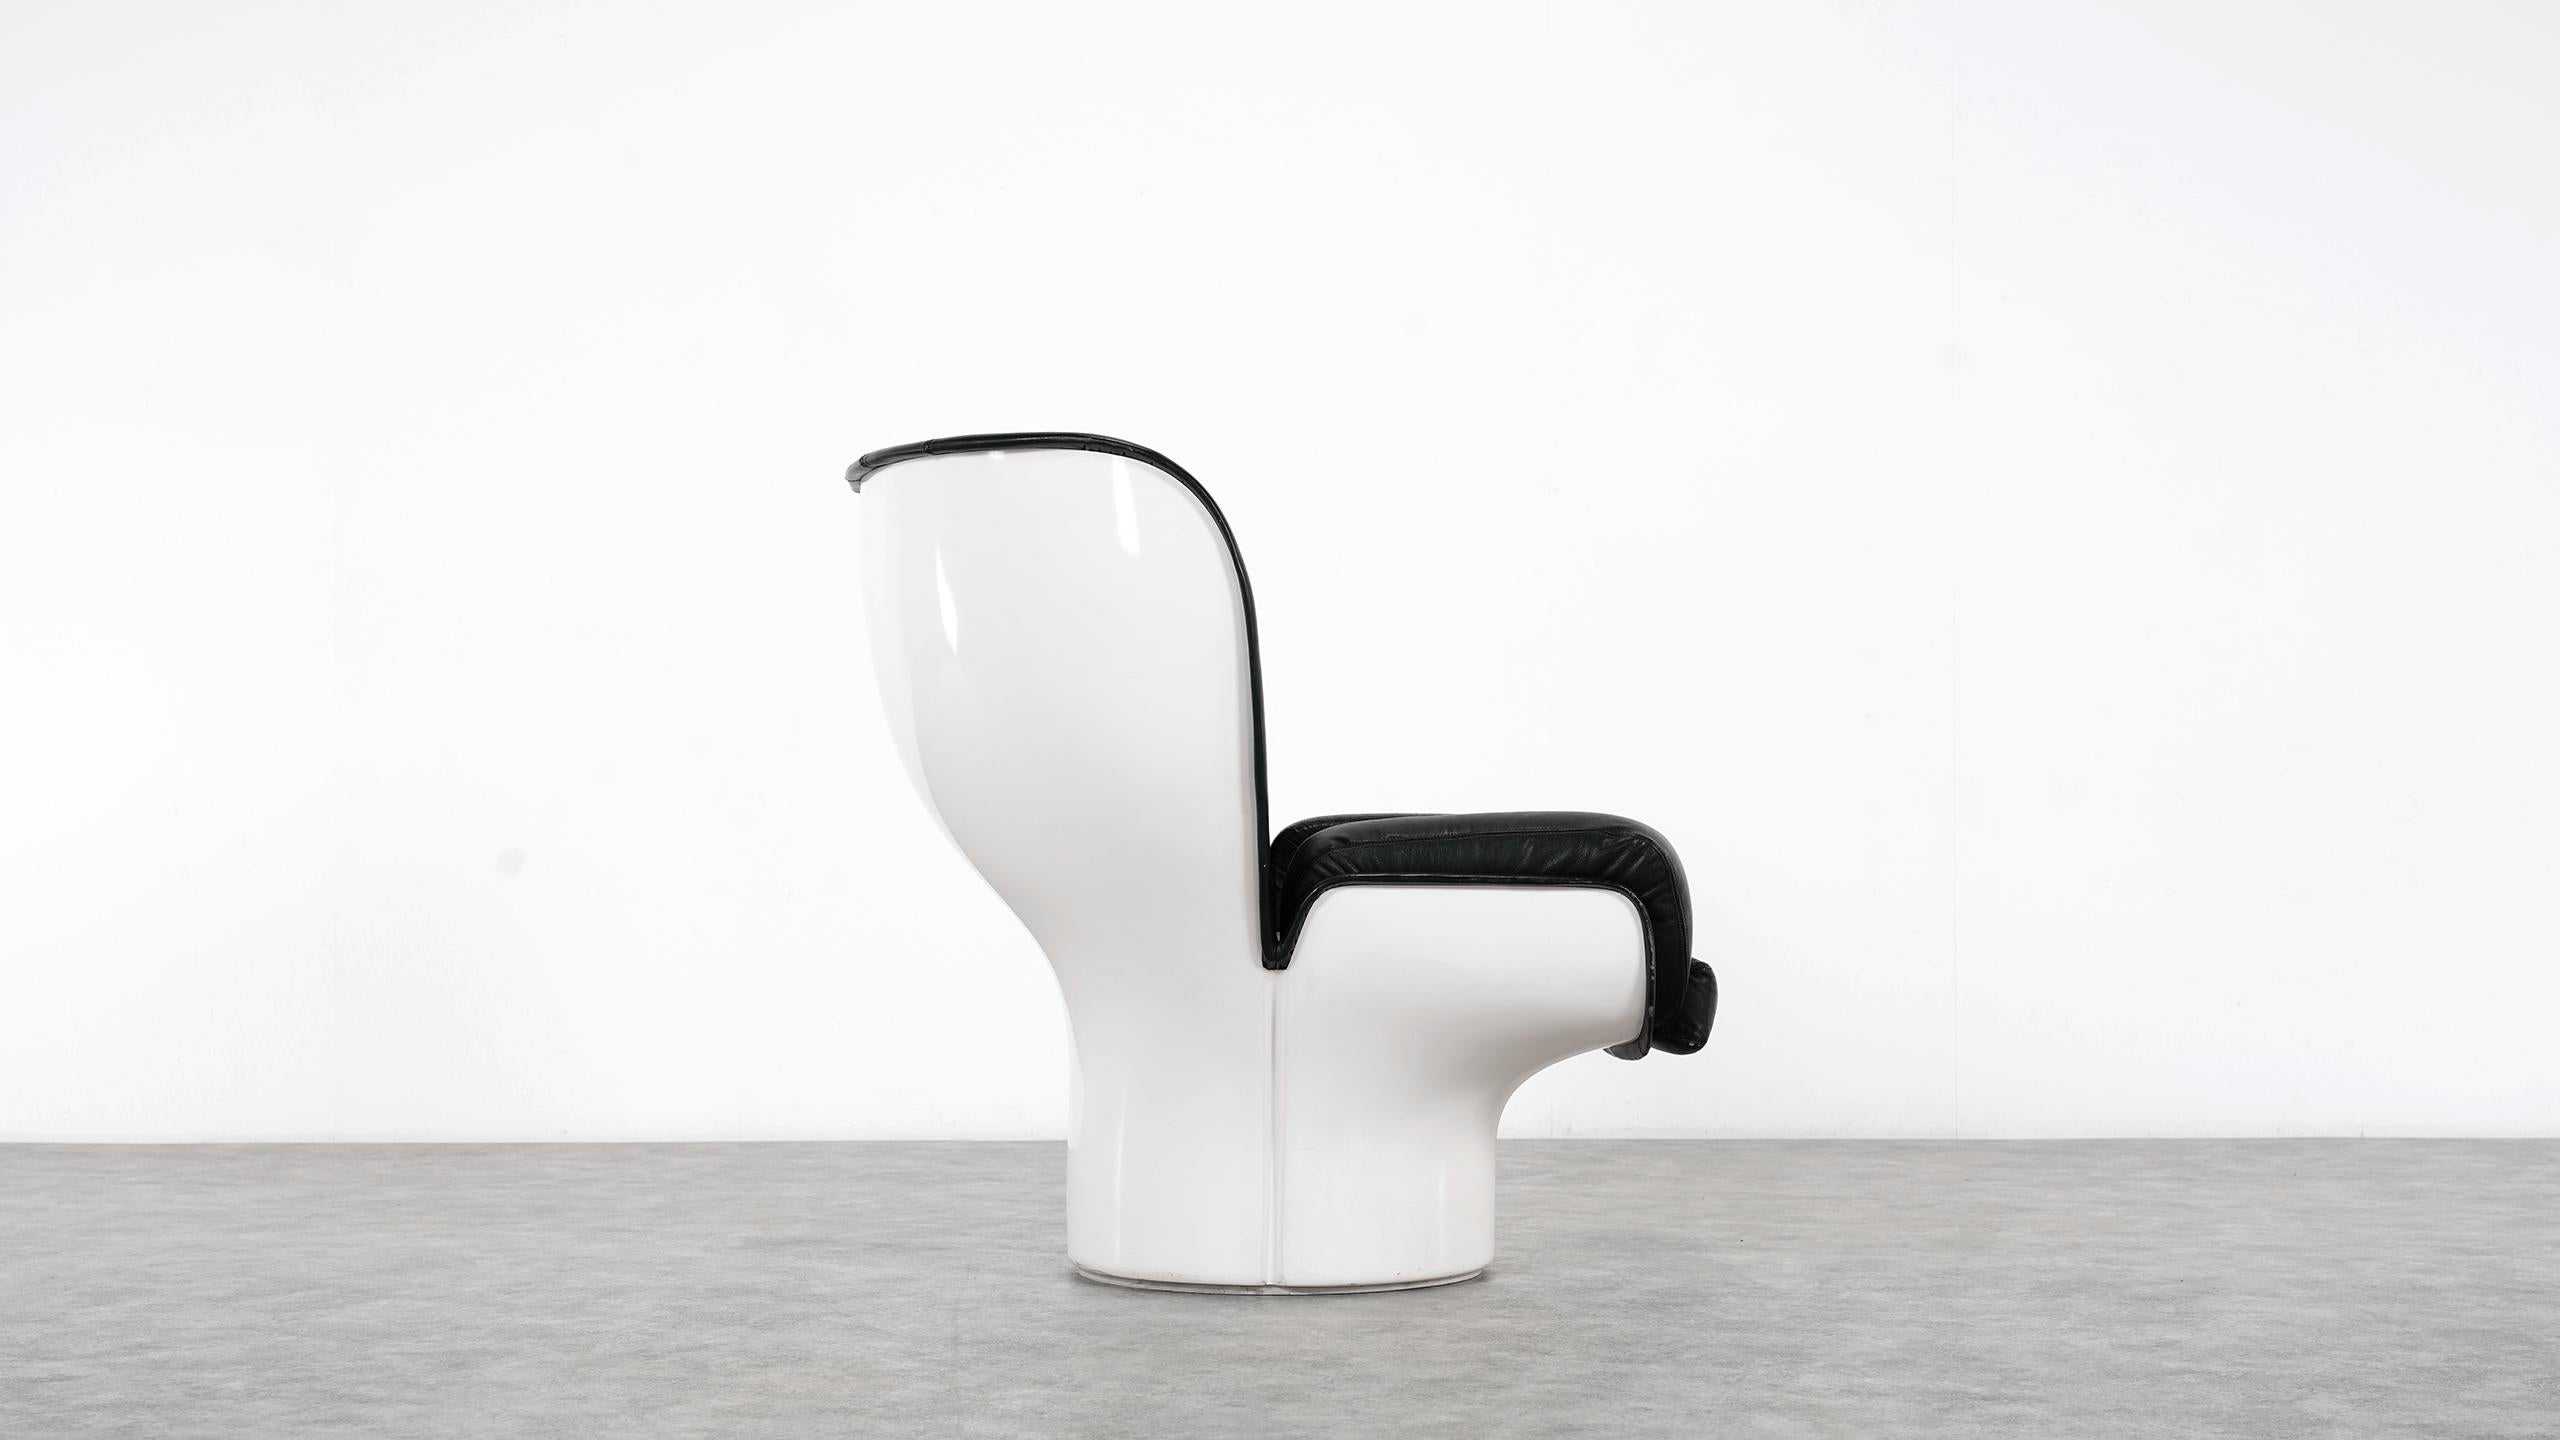 Leather Joe Colombo  Rare Elda Lounge Chair for Comfort, Italy, 1963, Black & White